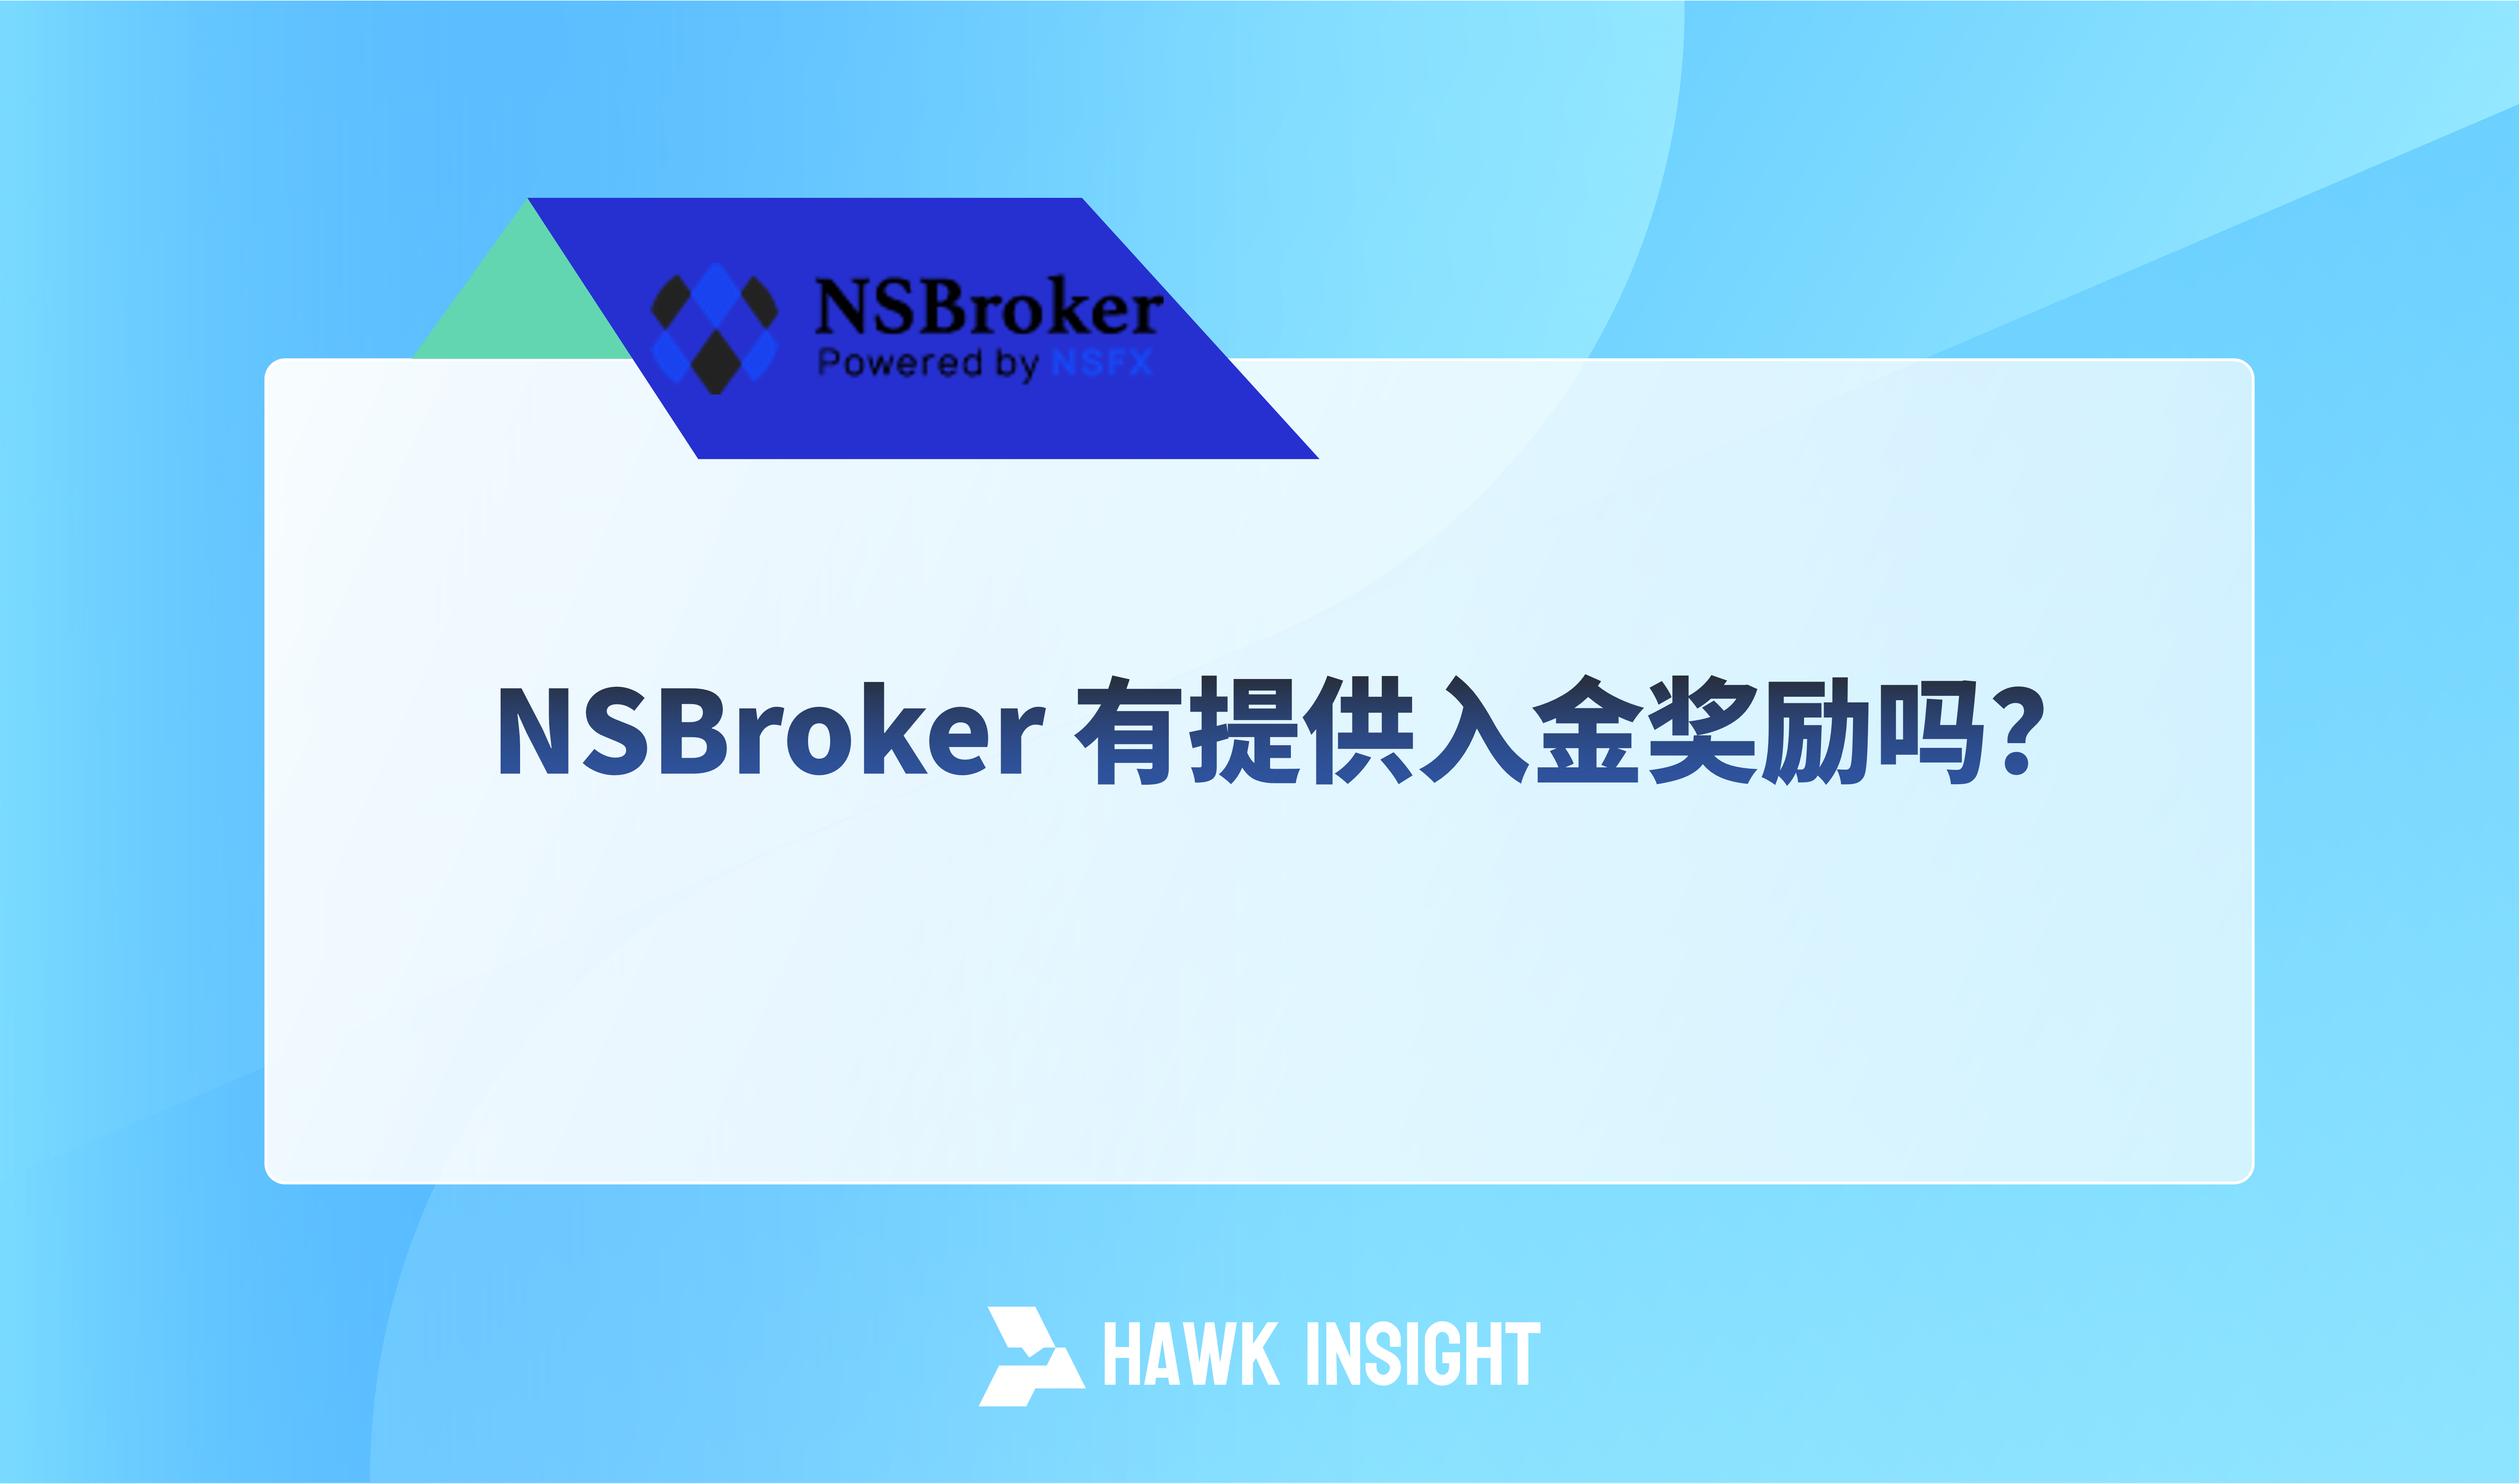 NSBroker 有提供入金奖励吗？